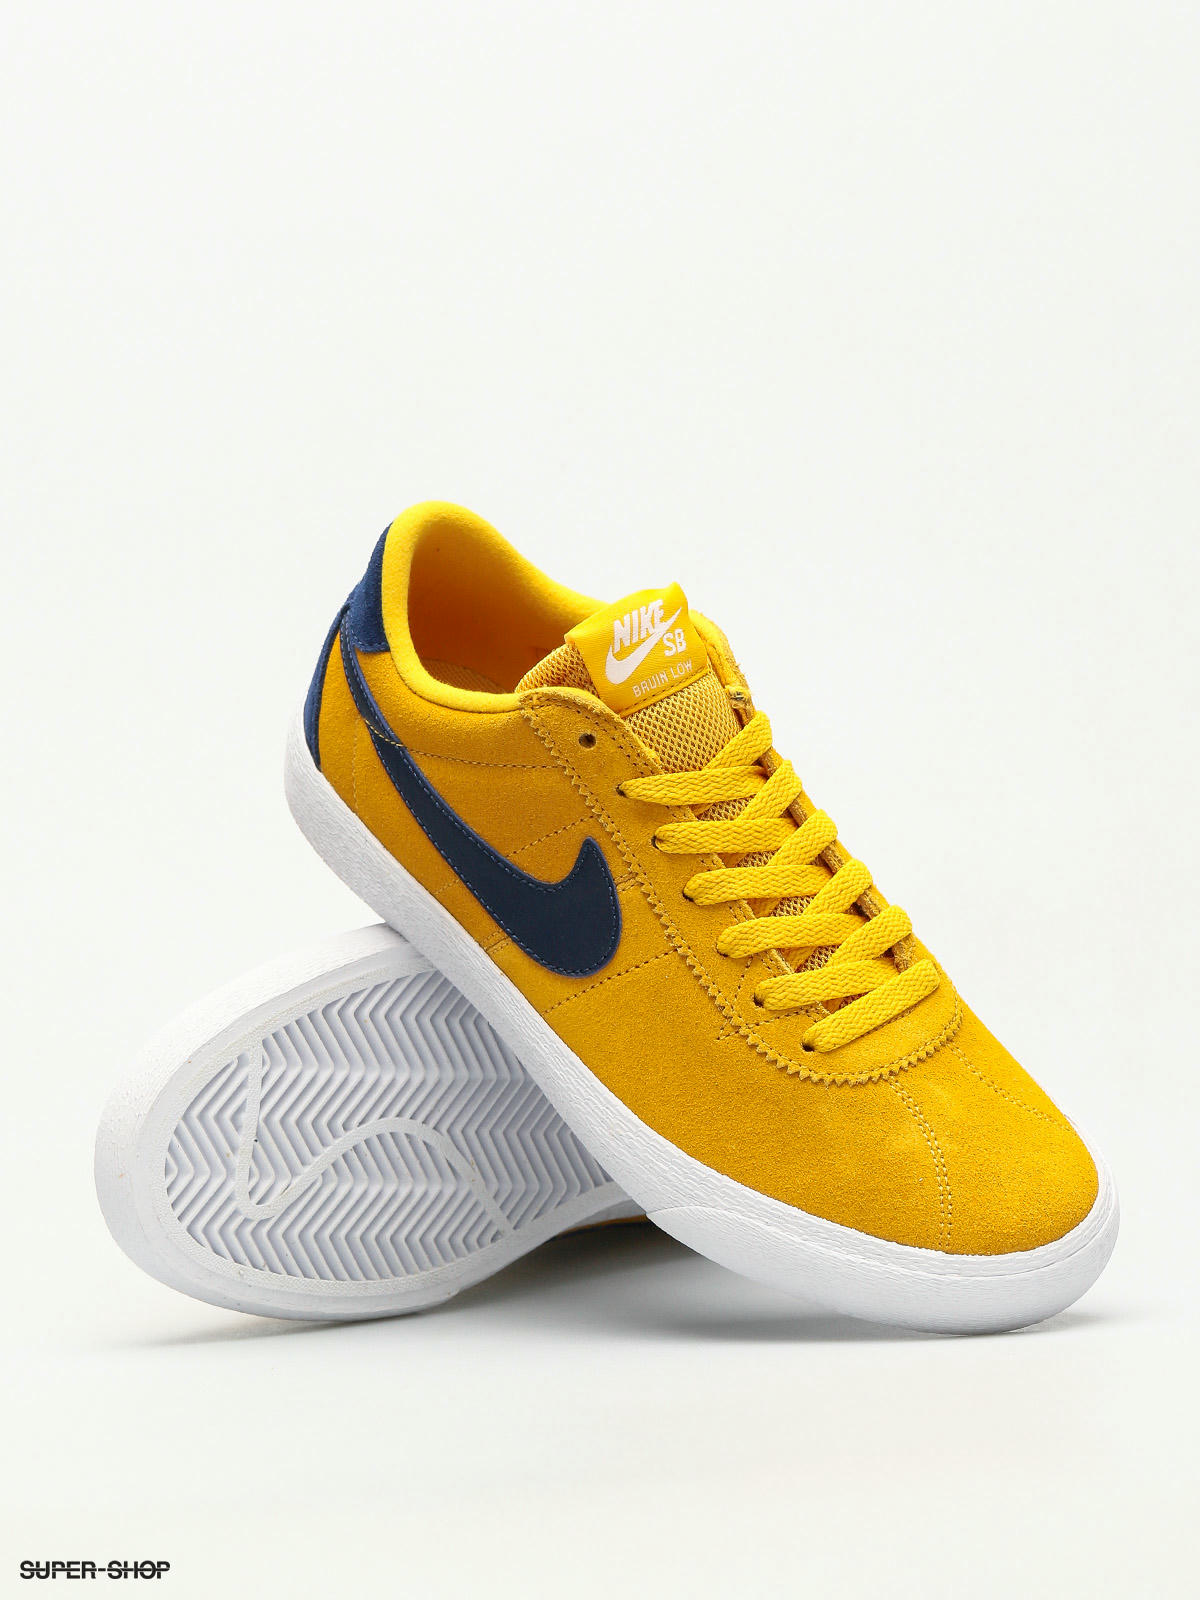 Nike SB Sb Bruin Lo (yellow ochre/blue white)